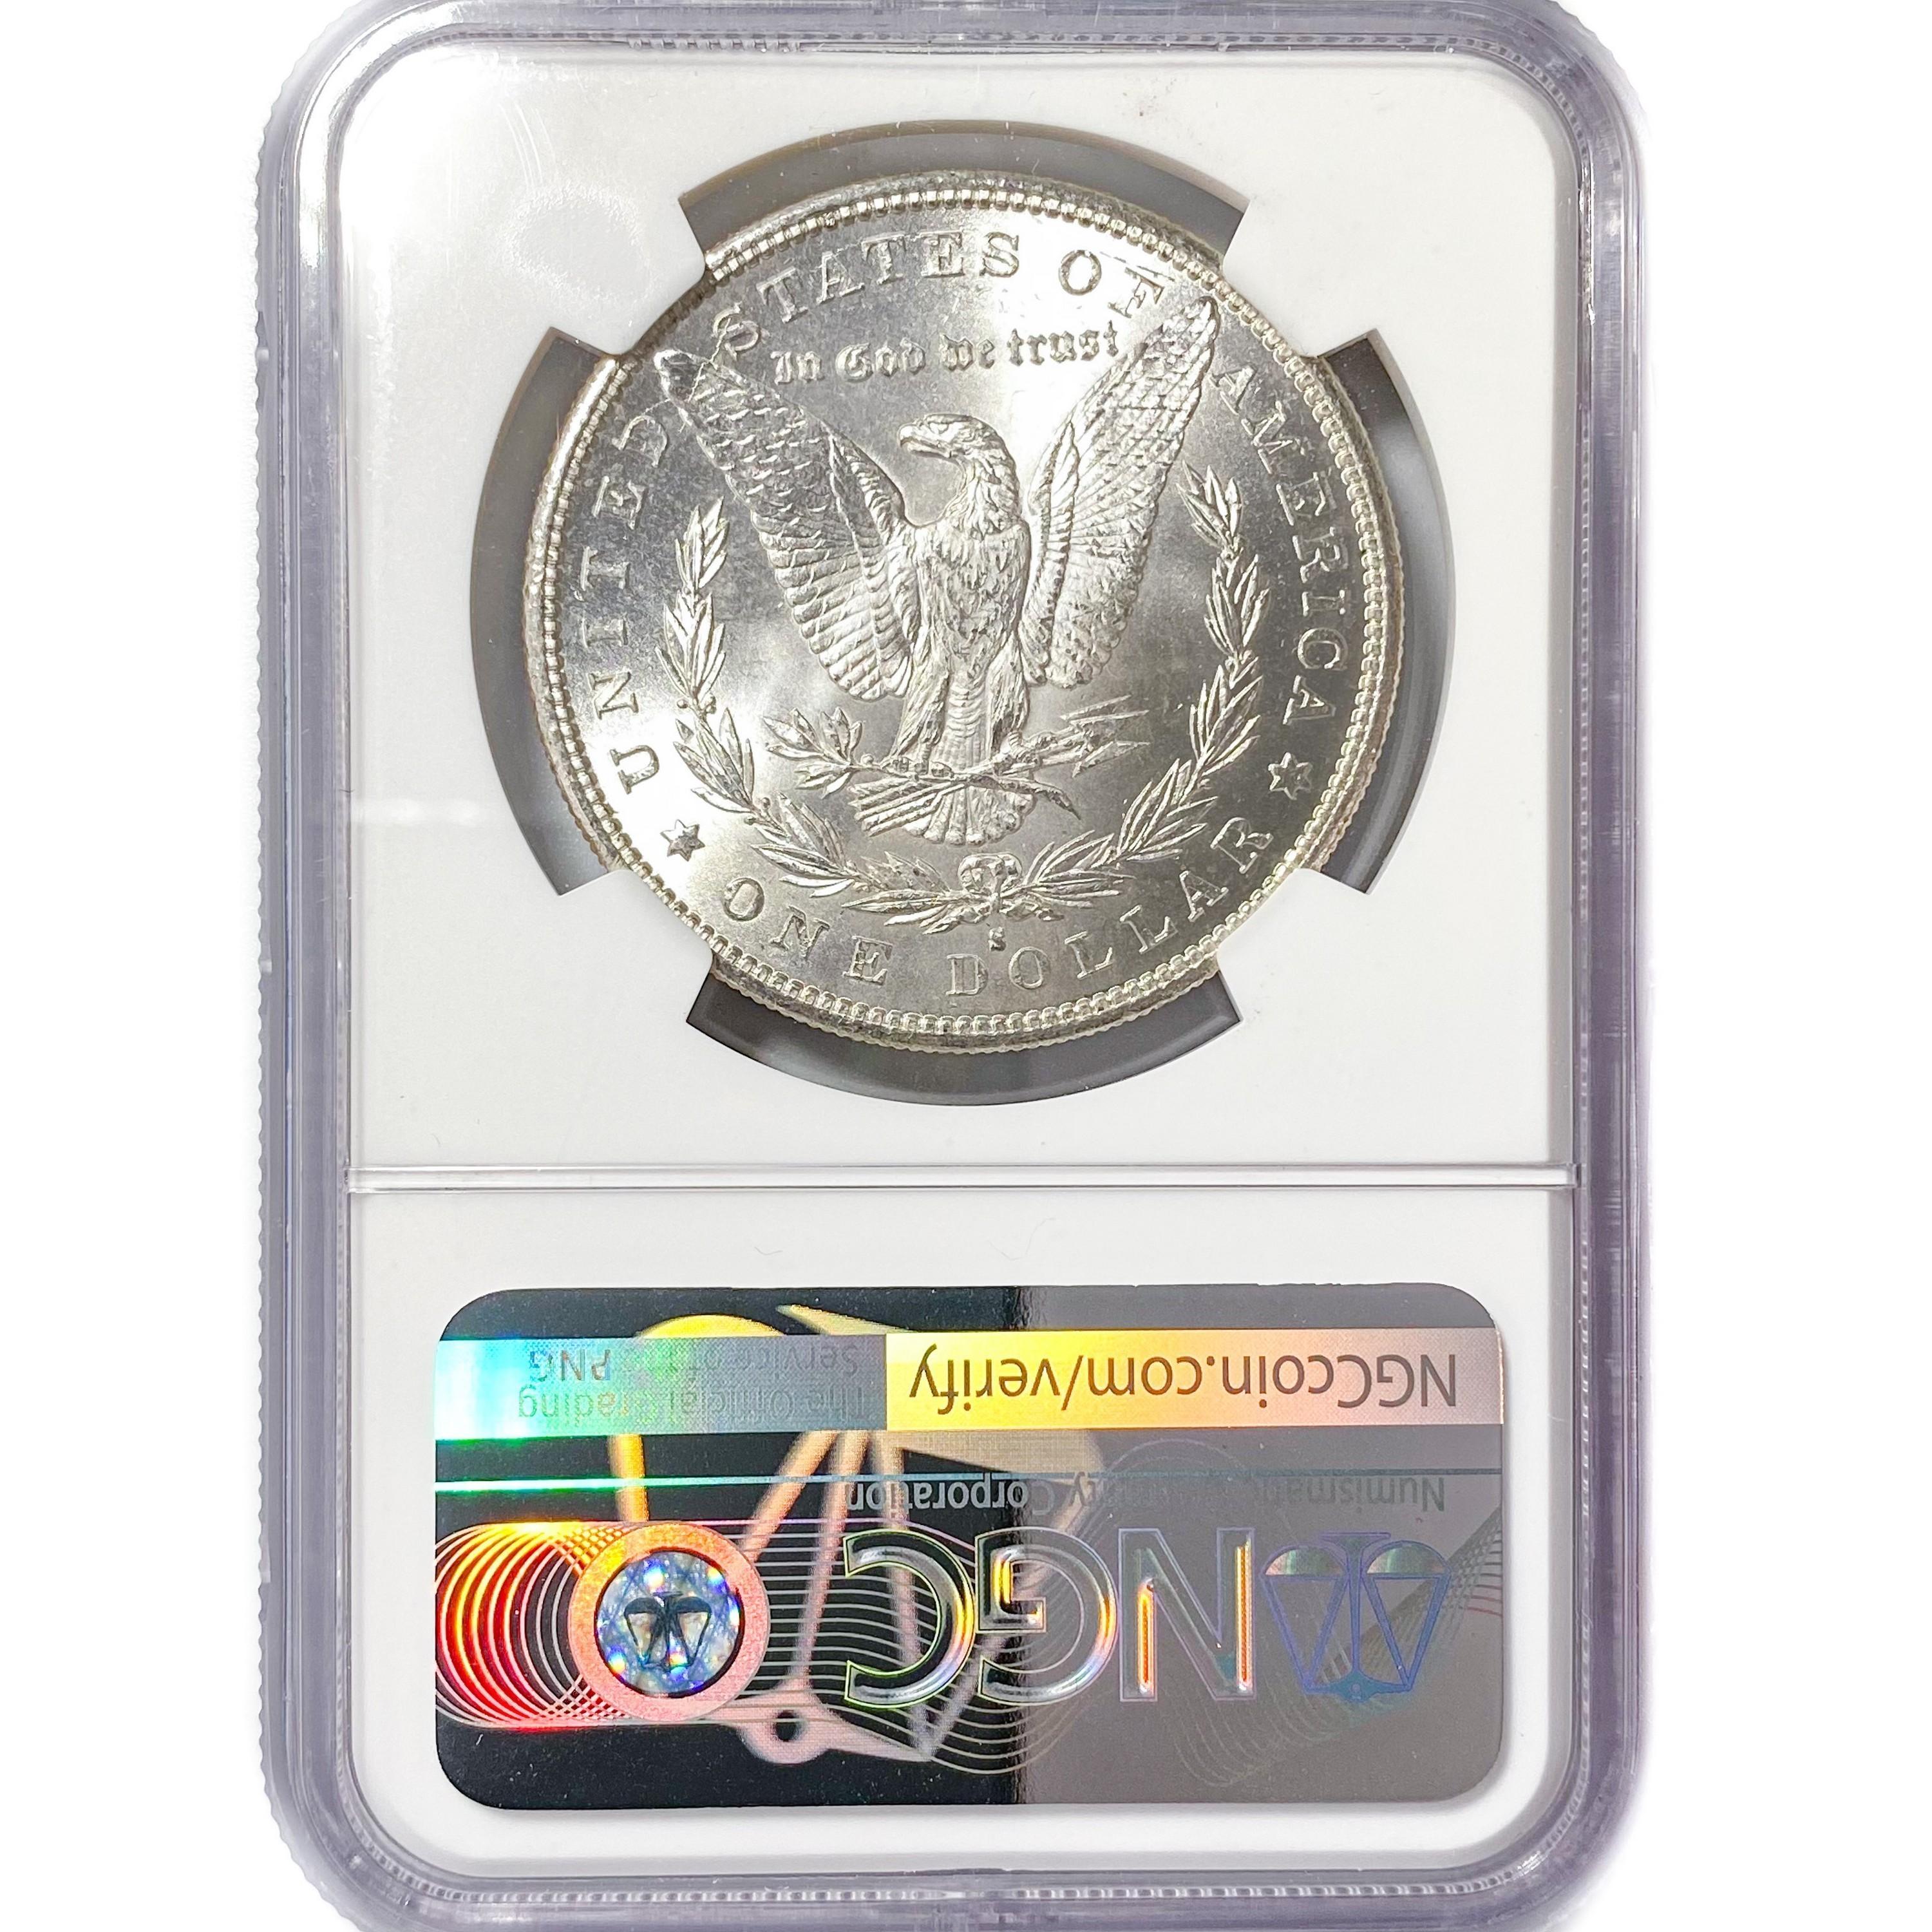 1890-S Morgan Silver Dollar NGC MS62